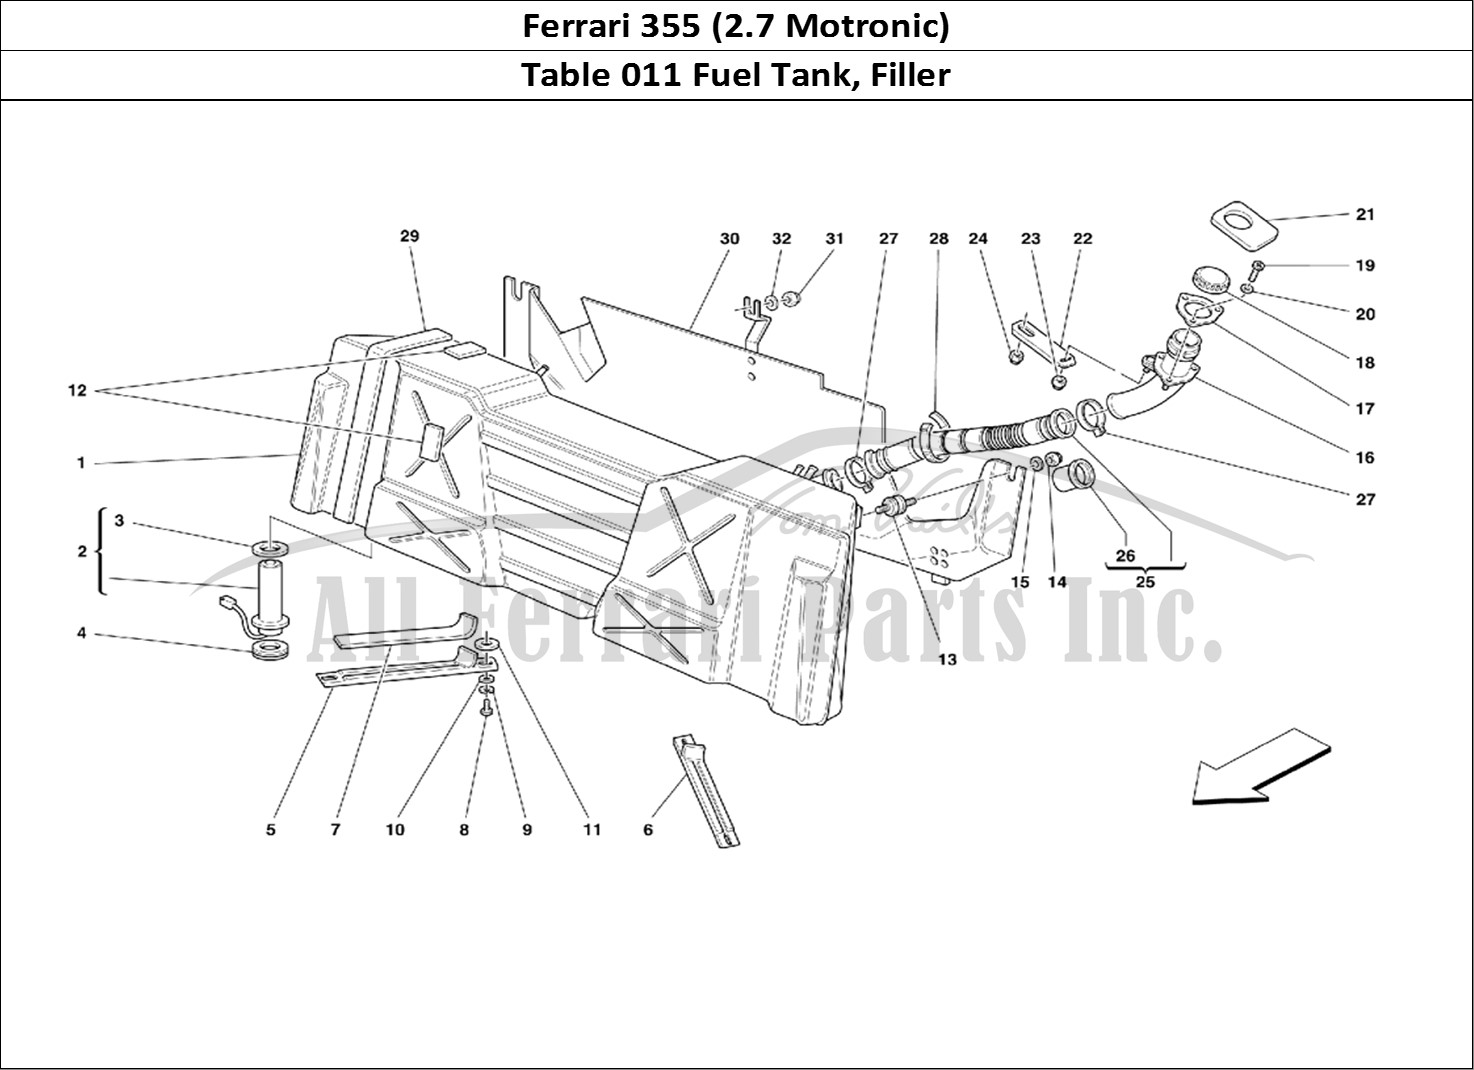 Ferrari Parts Ferrari 355 (2.7 Motronic) Page 011 Fuel Tank